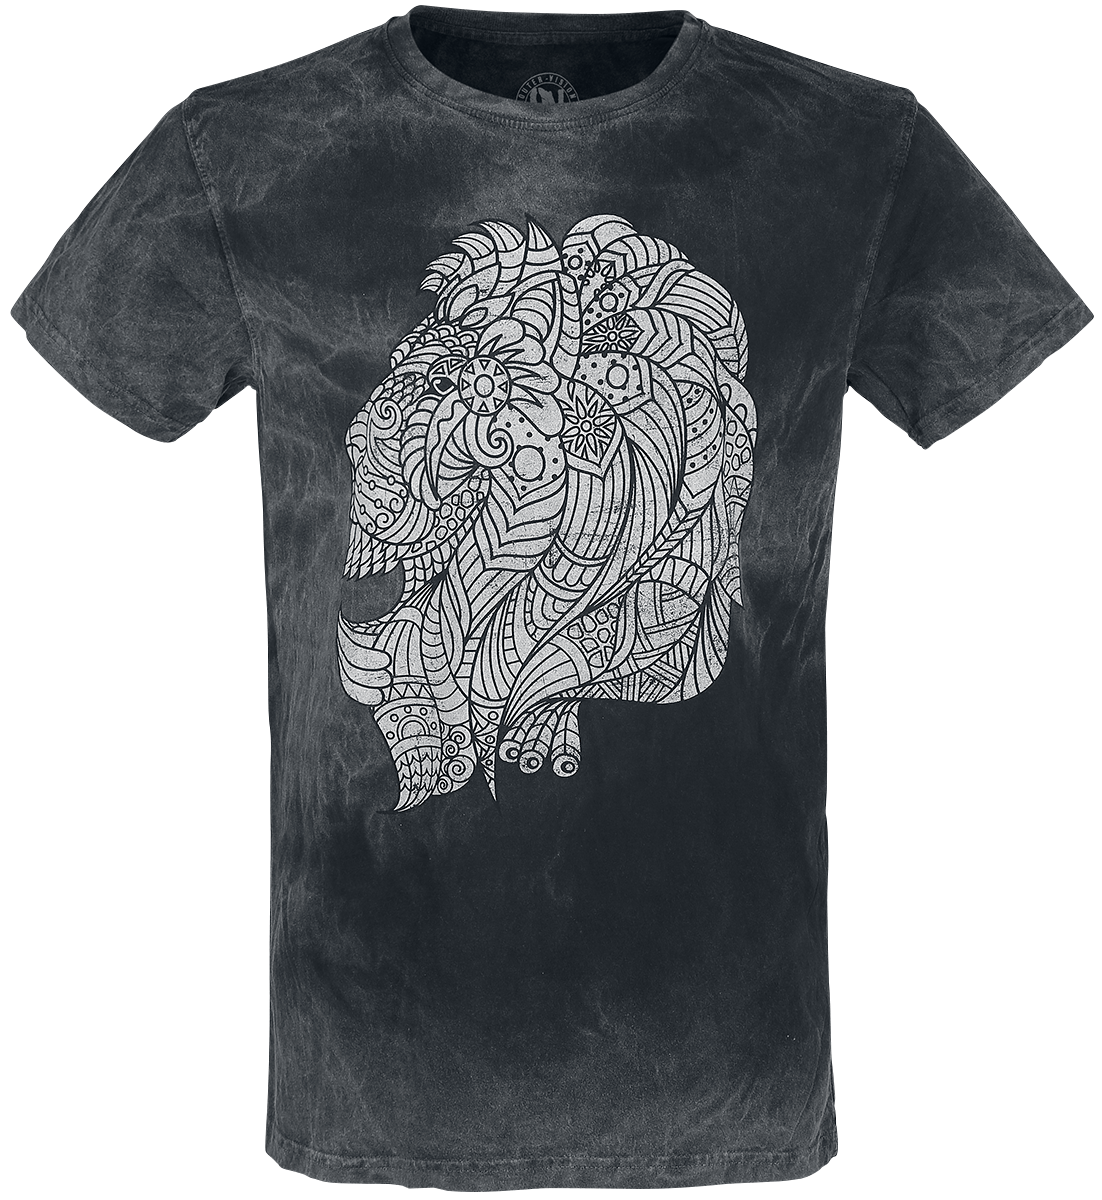 Outer Vision - Lion - T-Shirt - black image